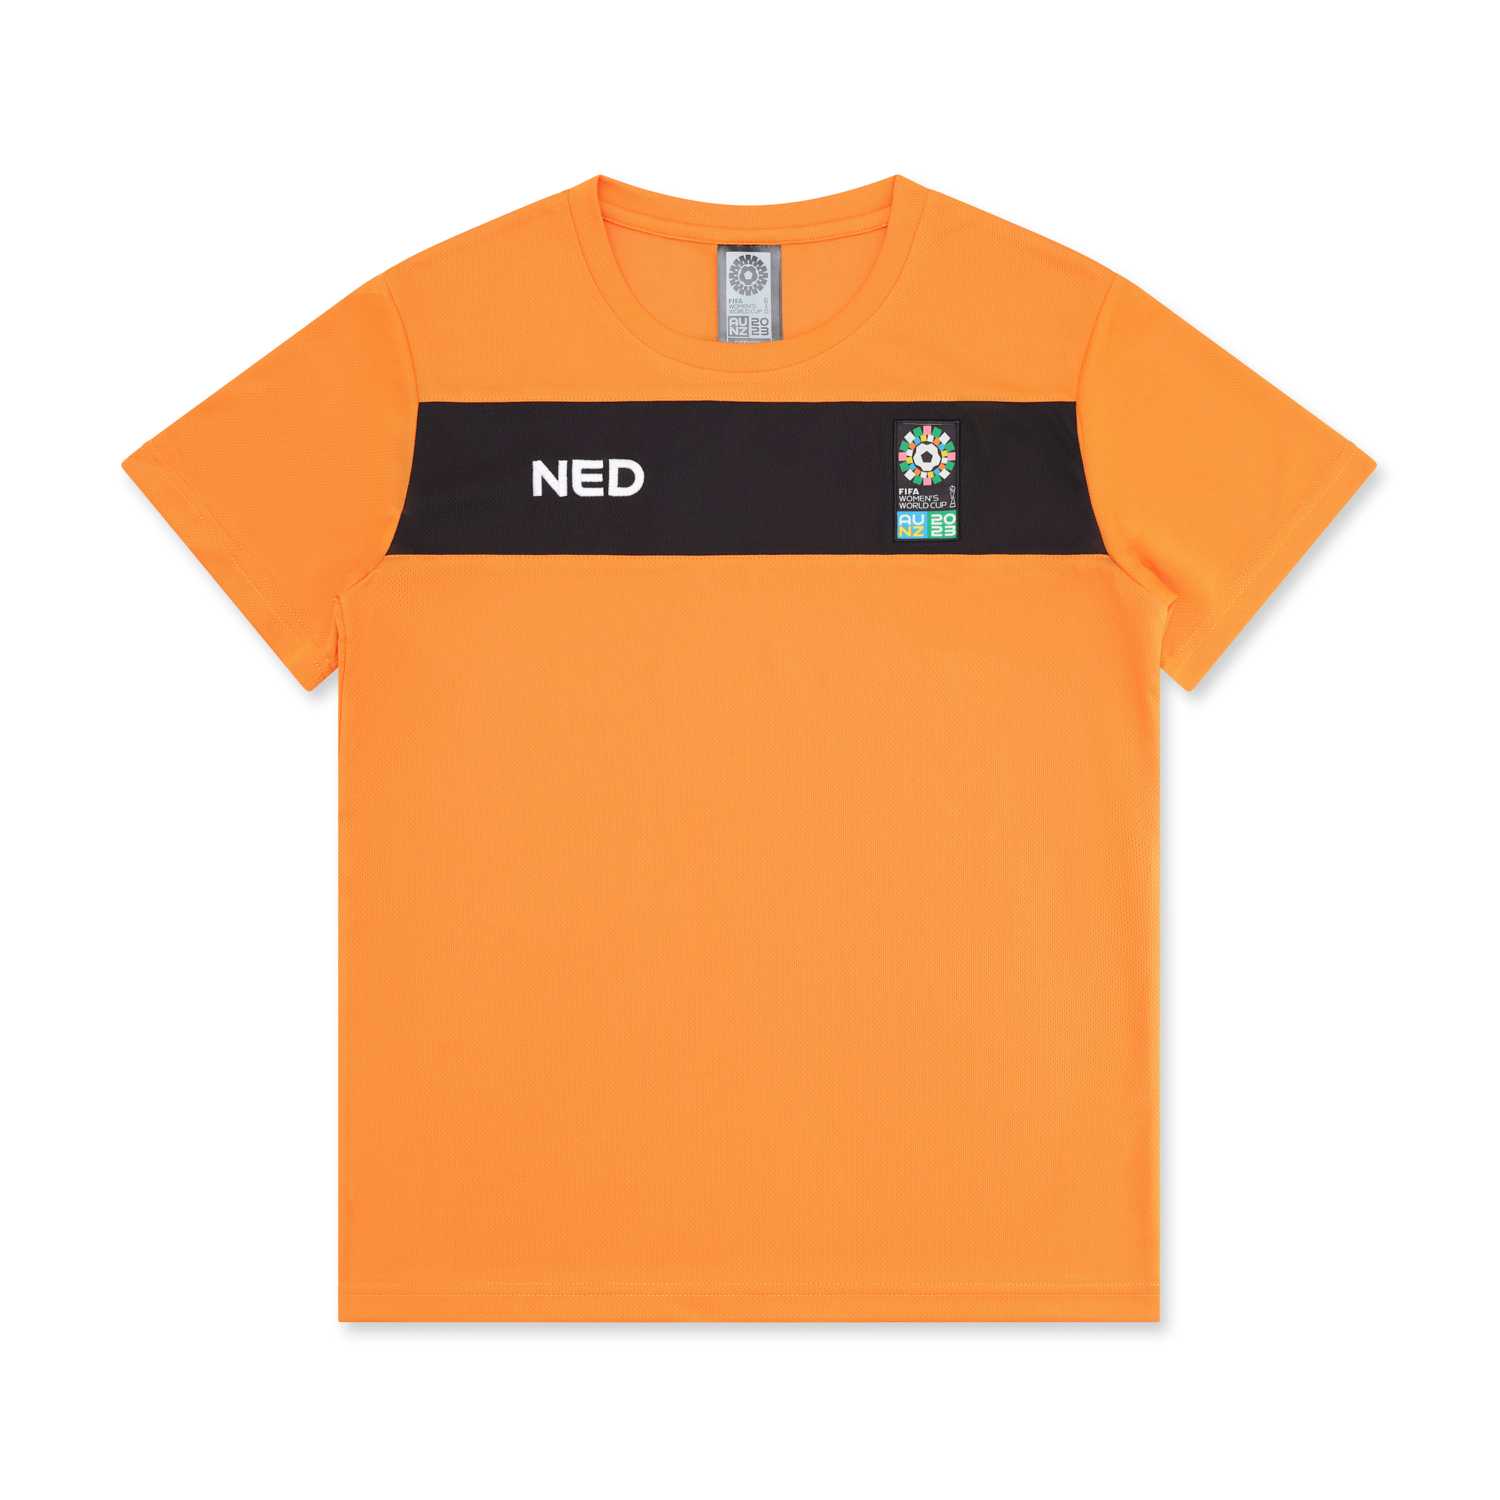 Netherlands Women's World Cup 2023 Orange T-Shirt - Unisex